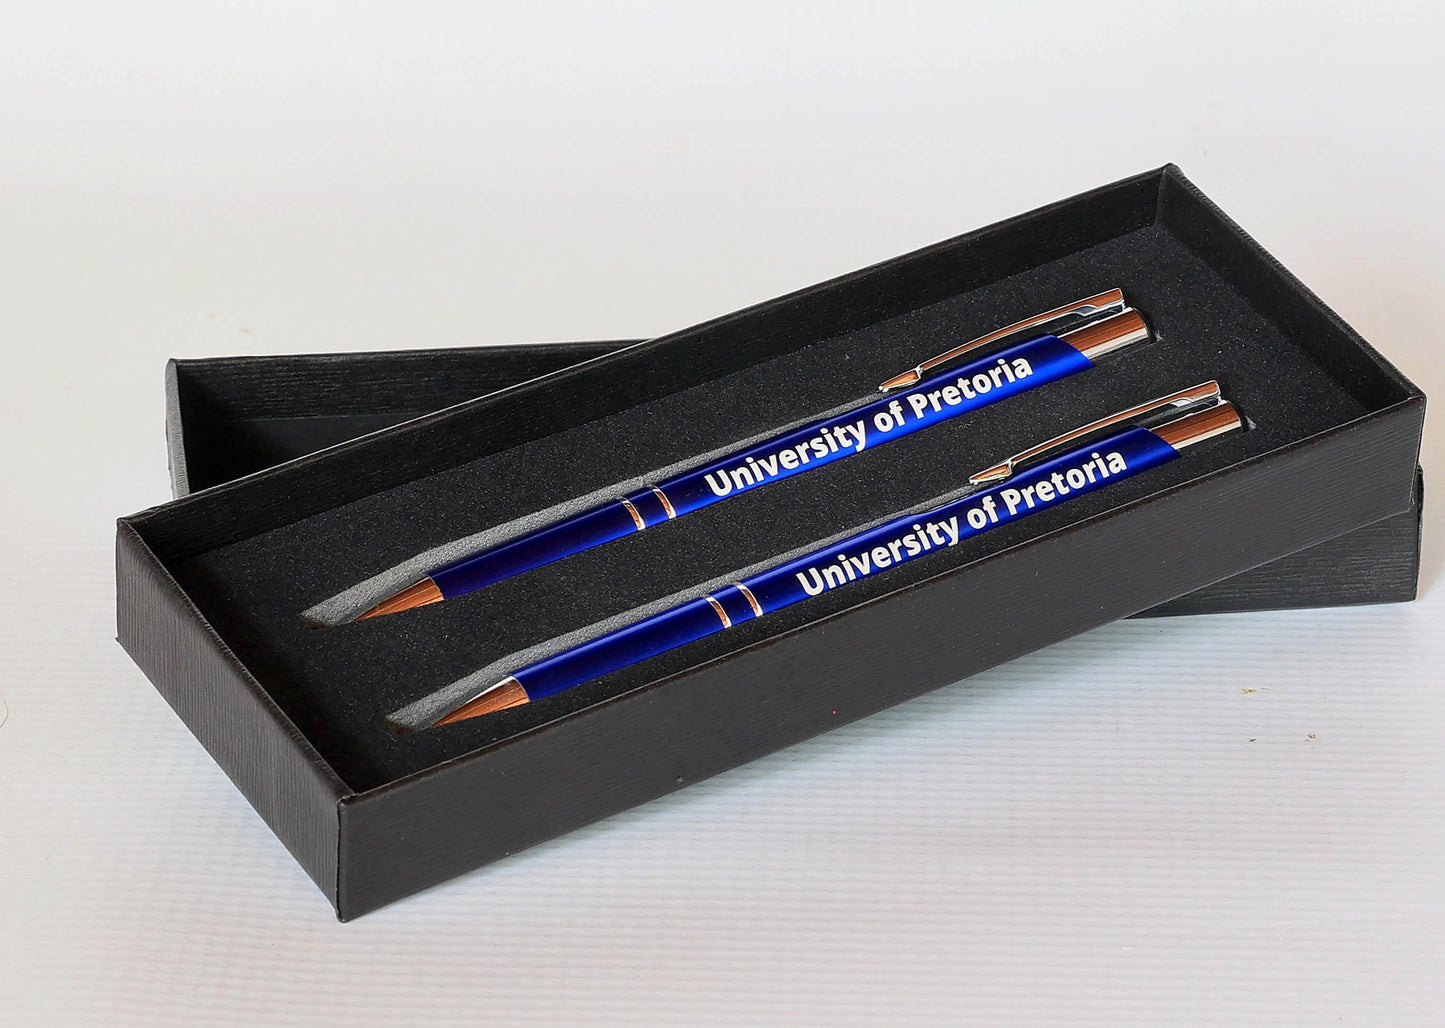 UP Branded Pen & Pencil Set